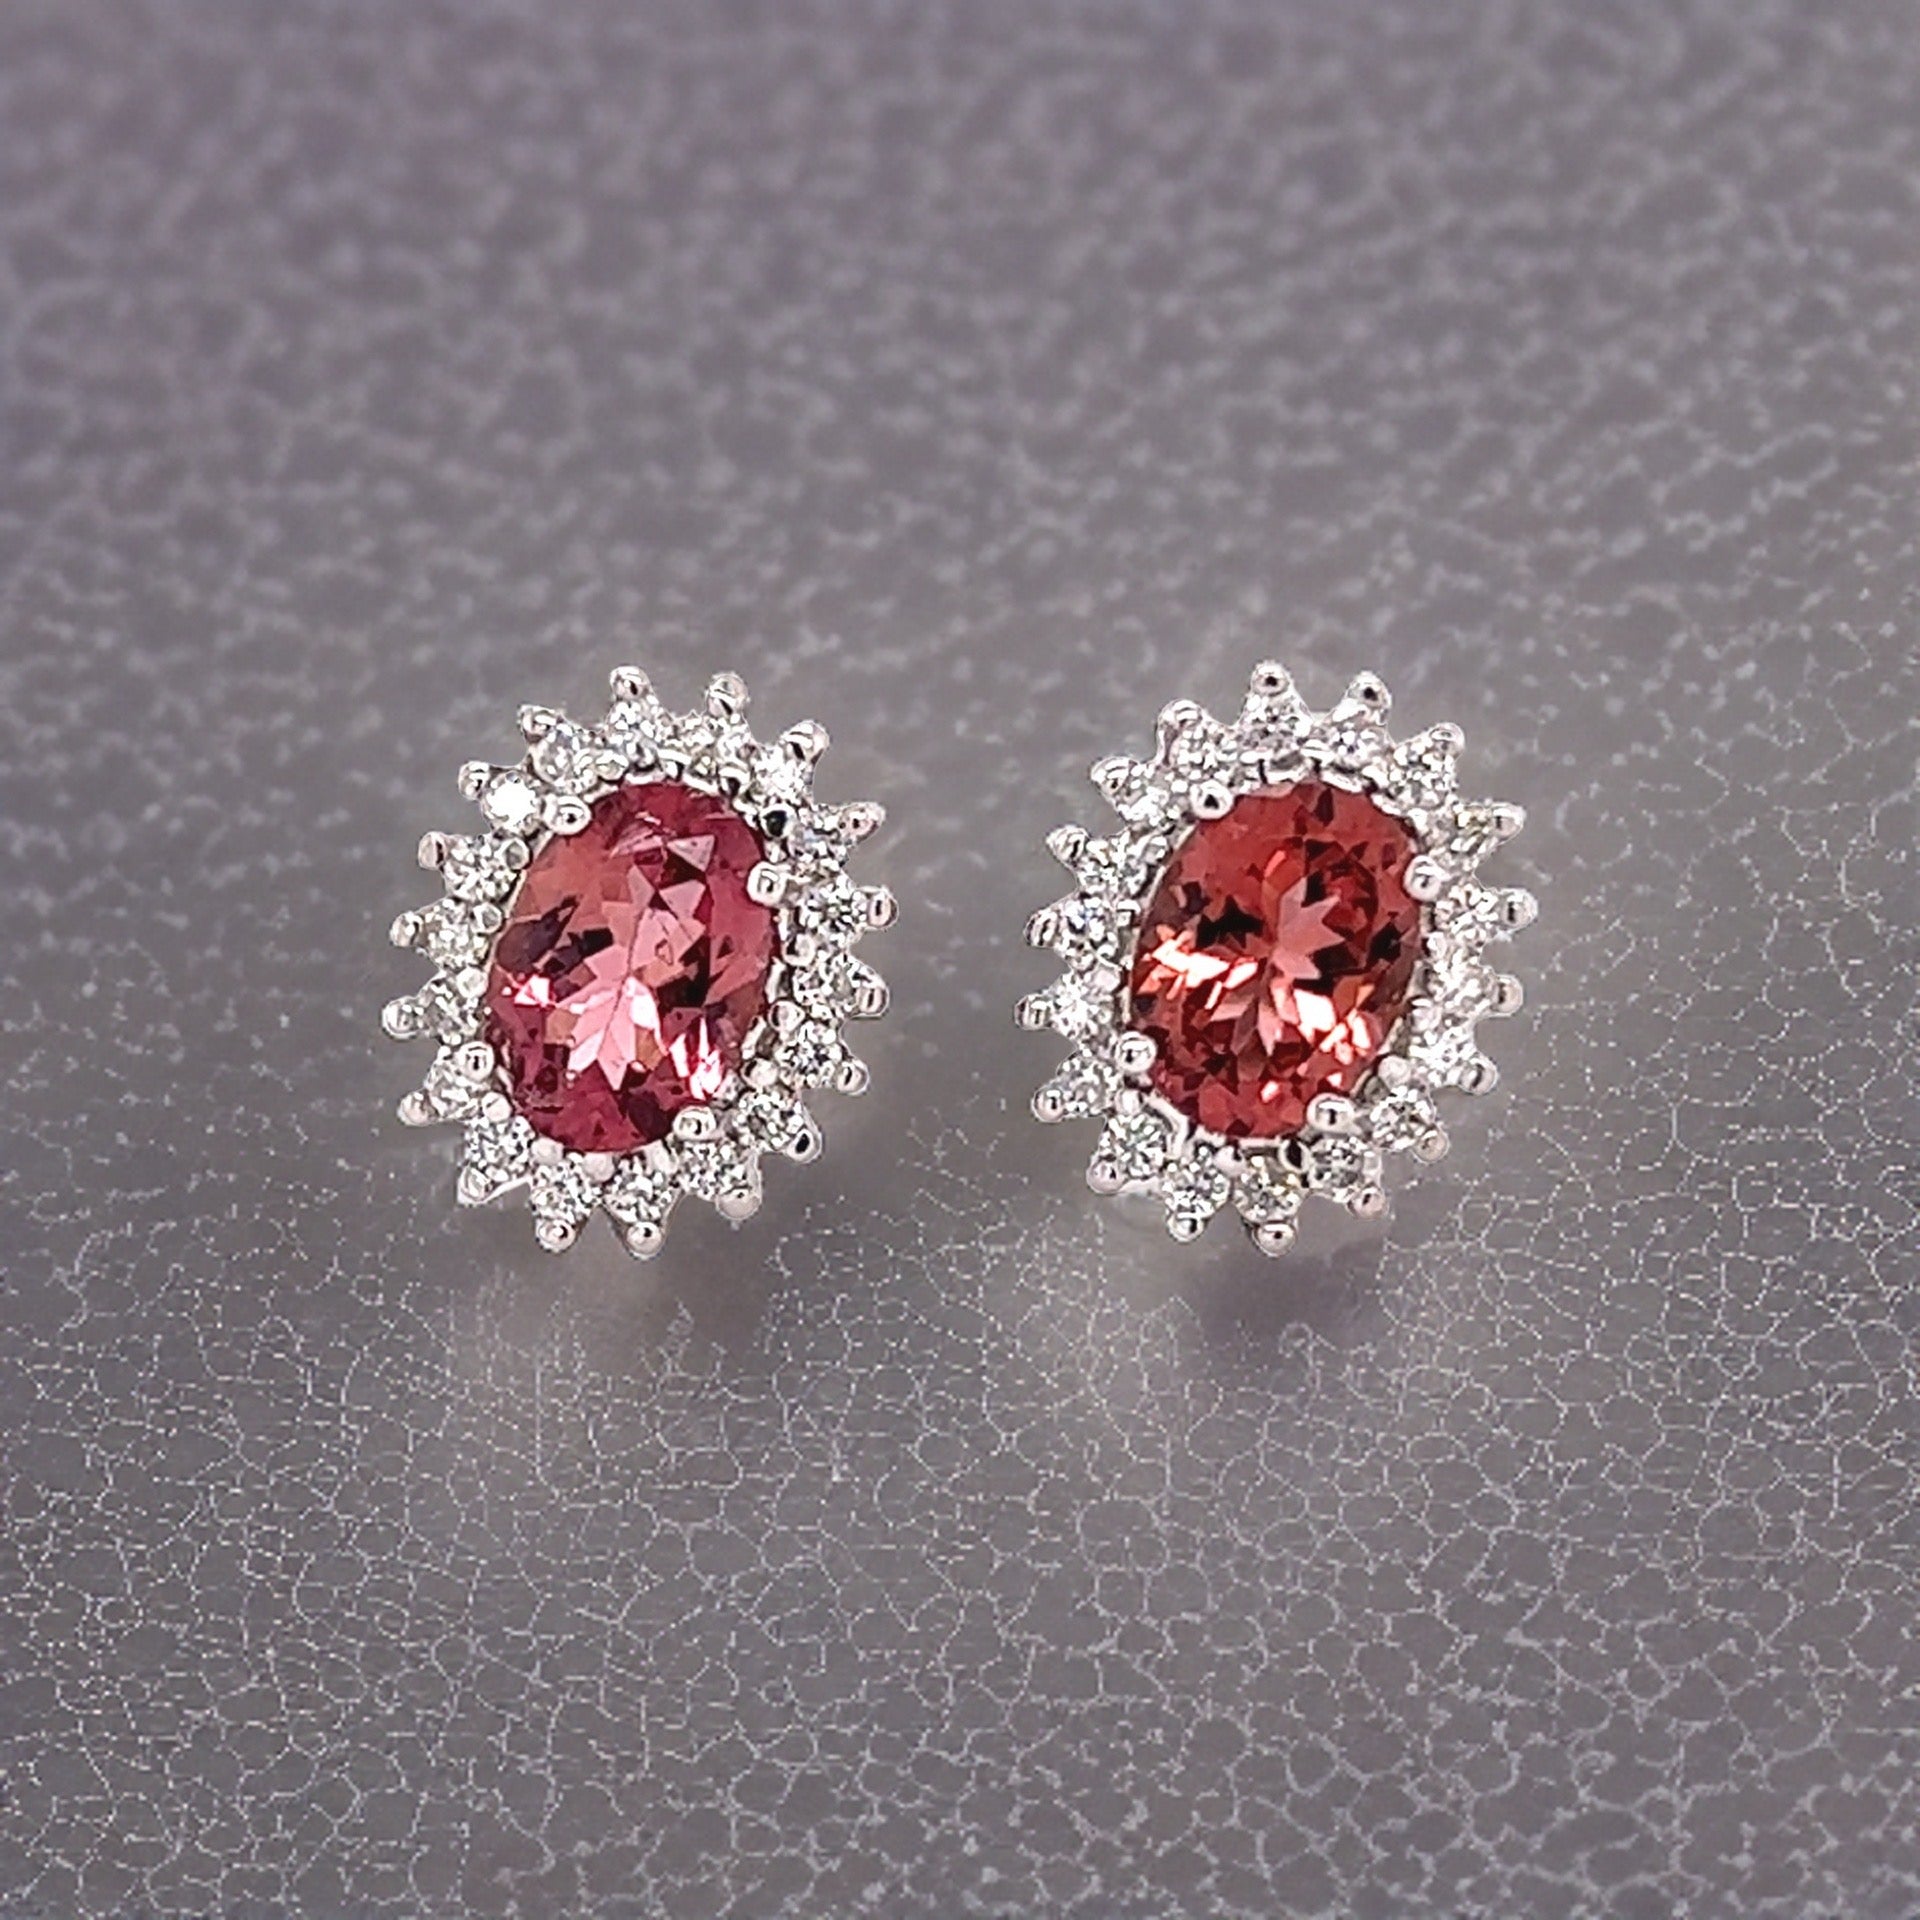 Natural Tourmaline Diamond Earrings 14k Gold 1.94 TCW Certified $3,950 215100 - Certified Fine Jewelry